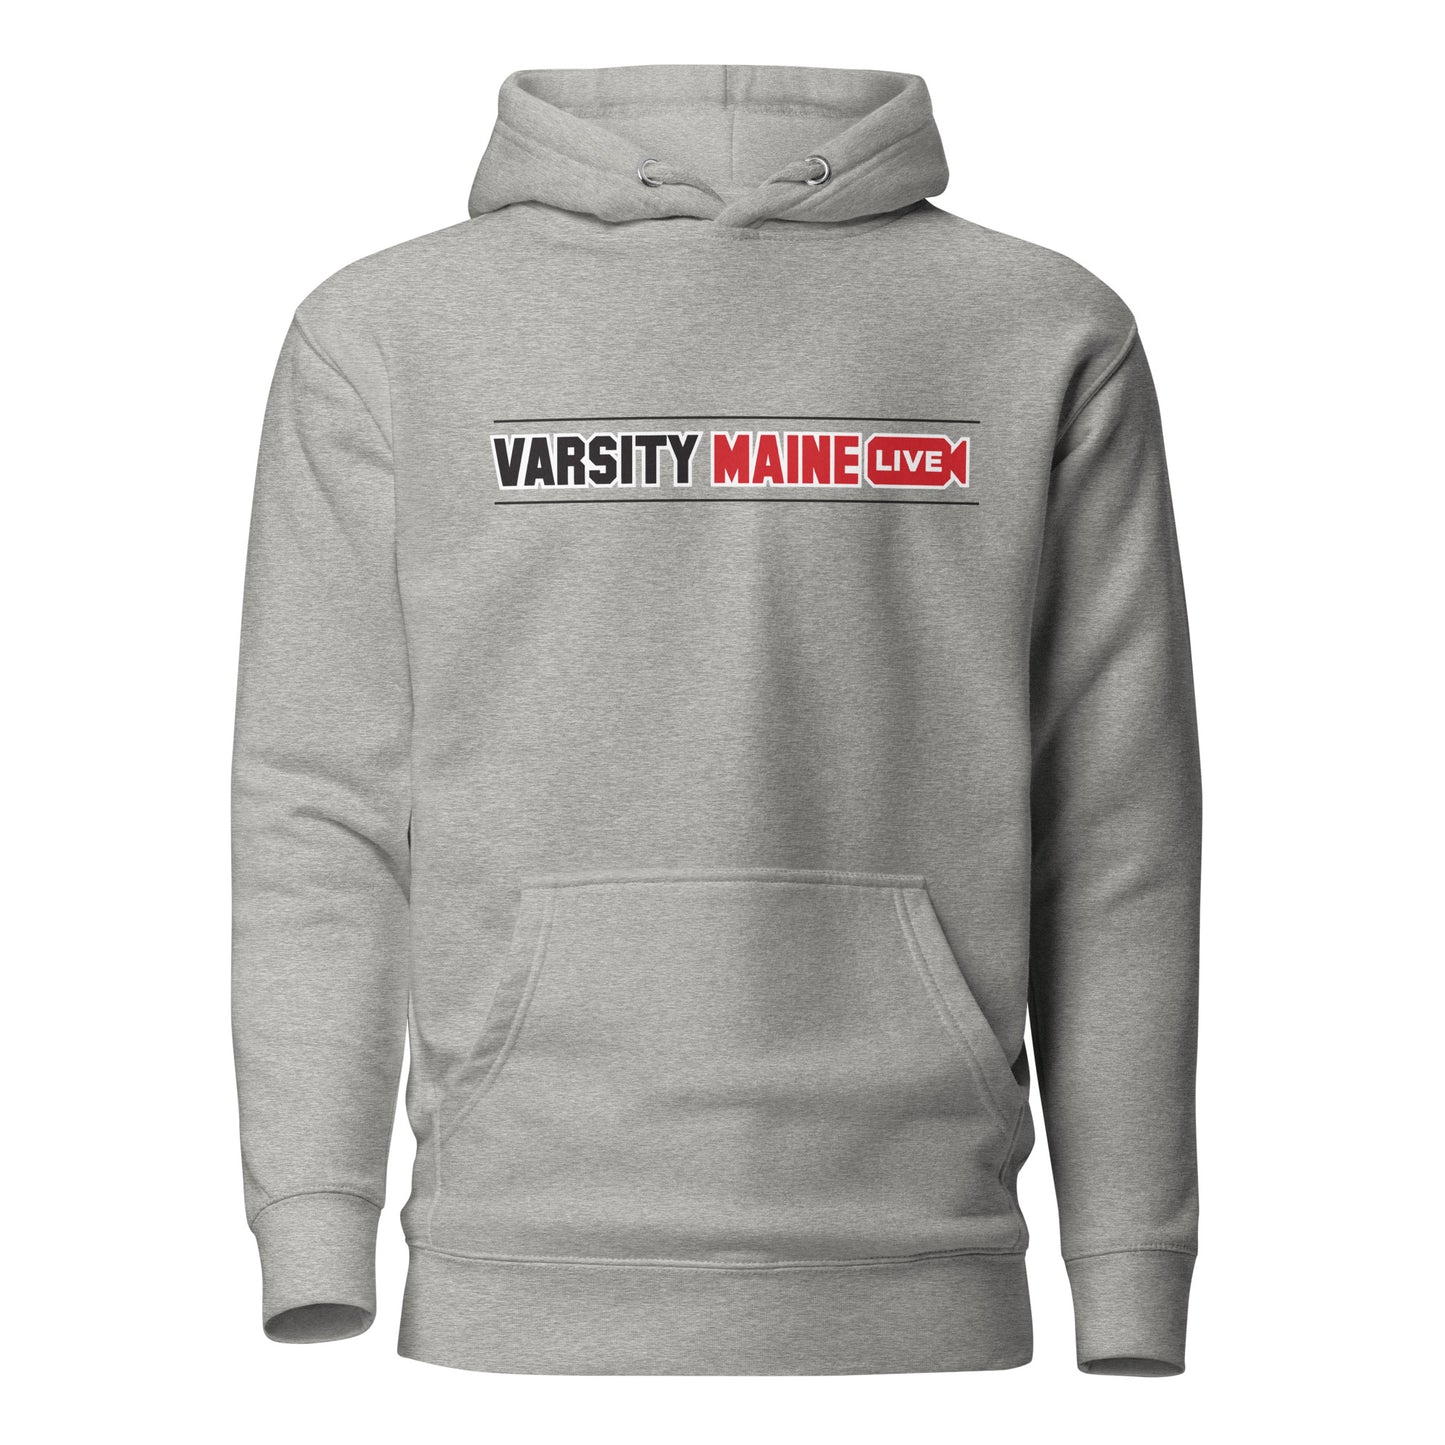 Varsity Maine Live Unisex Hoodie